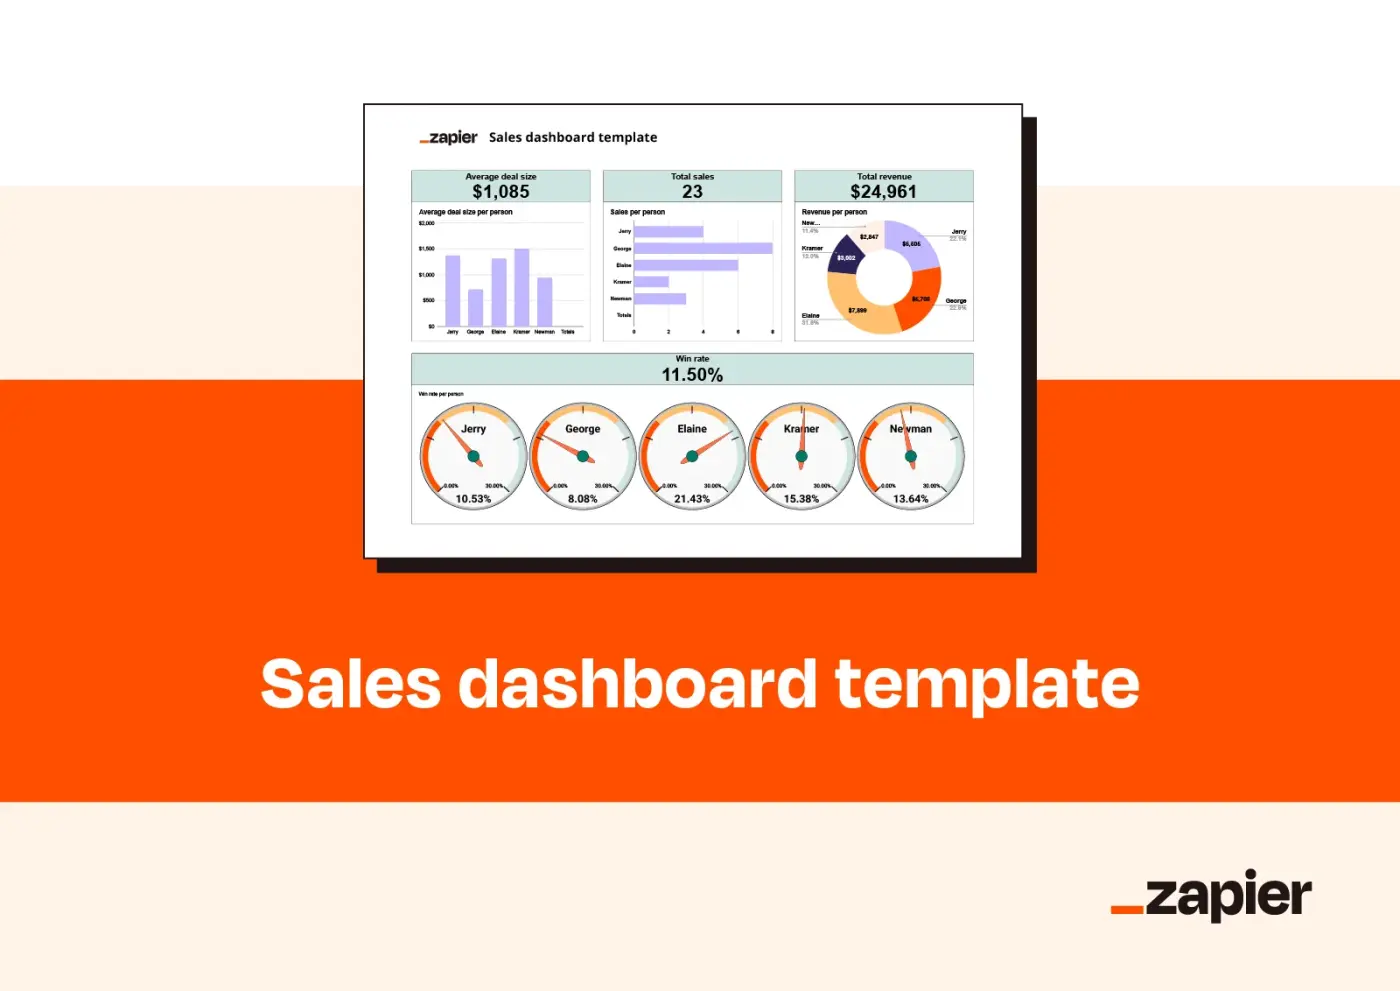 Mockup showcasing Zapier's sales dashboard template